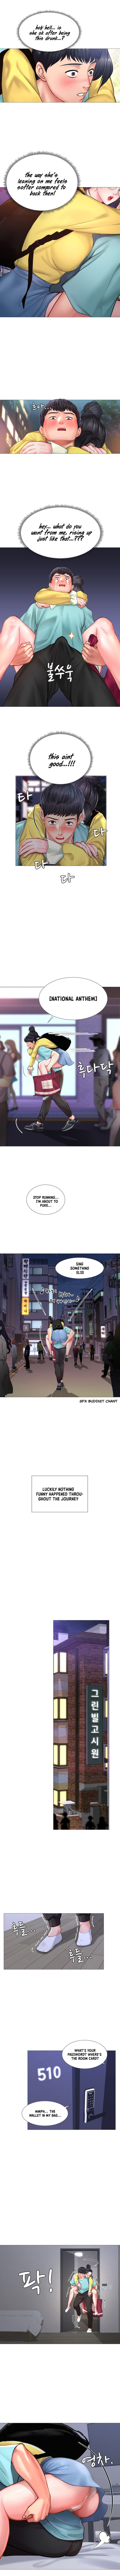 Should I Study at Noryangjin? - Chapter 21 Page 6